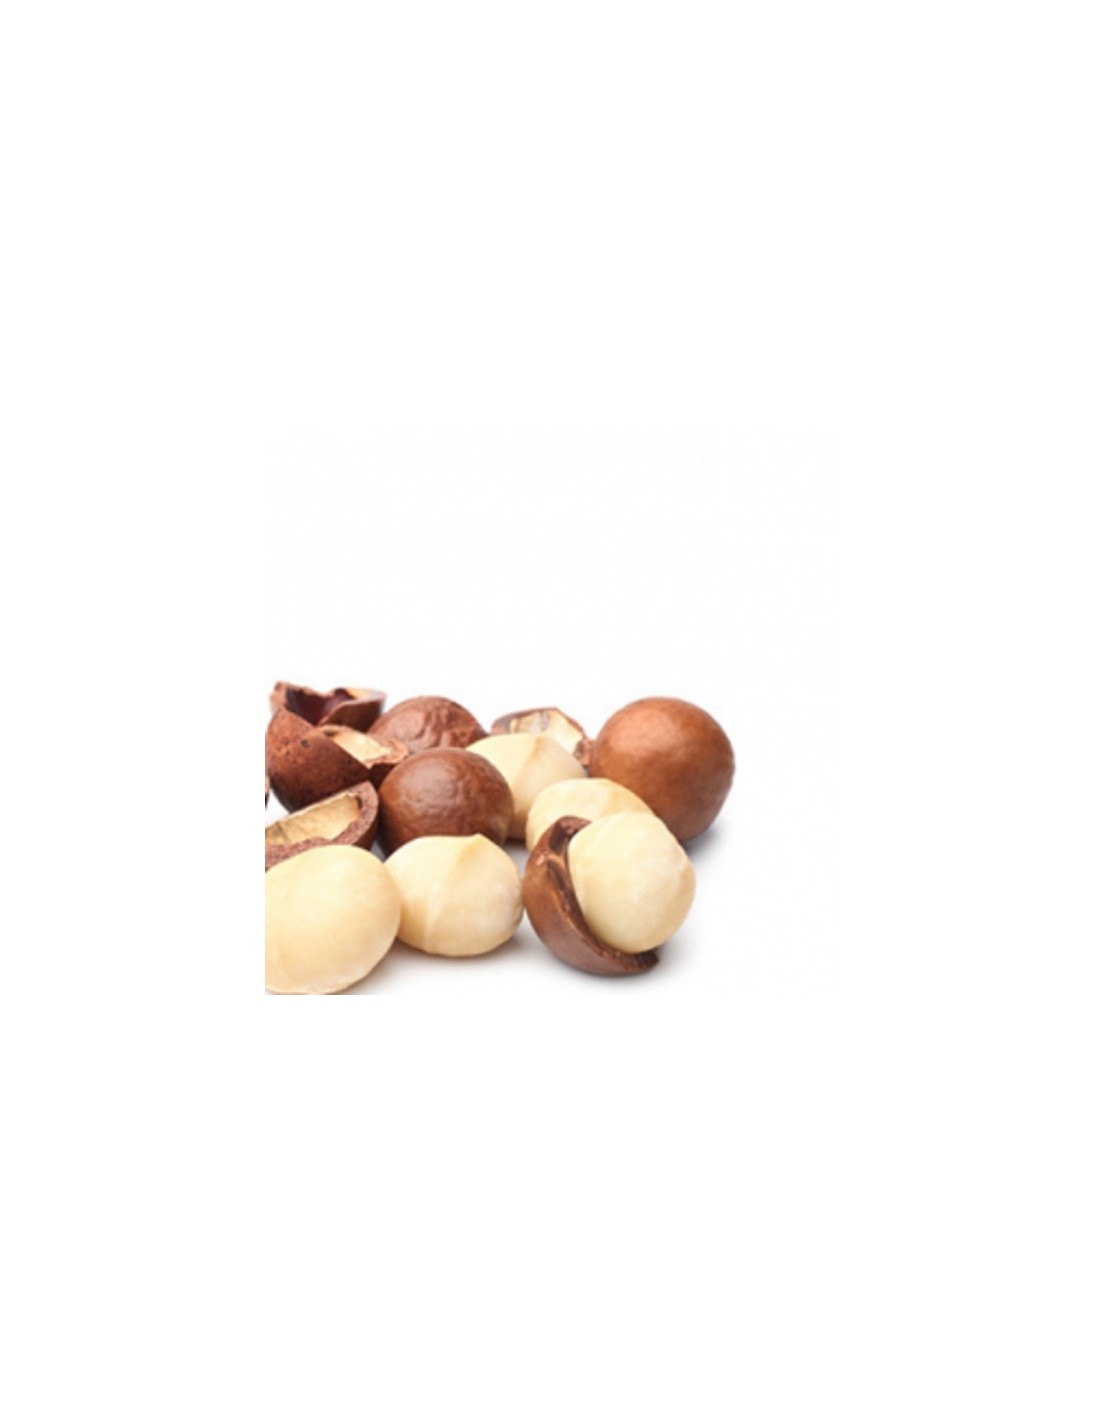 noix de macadamia bio du Kenya de haute qualité Keimling qualité crue